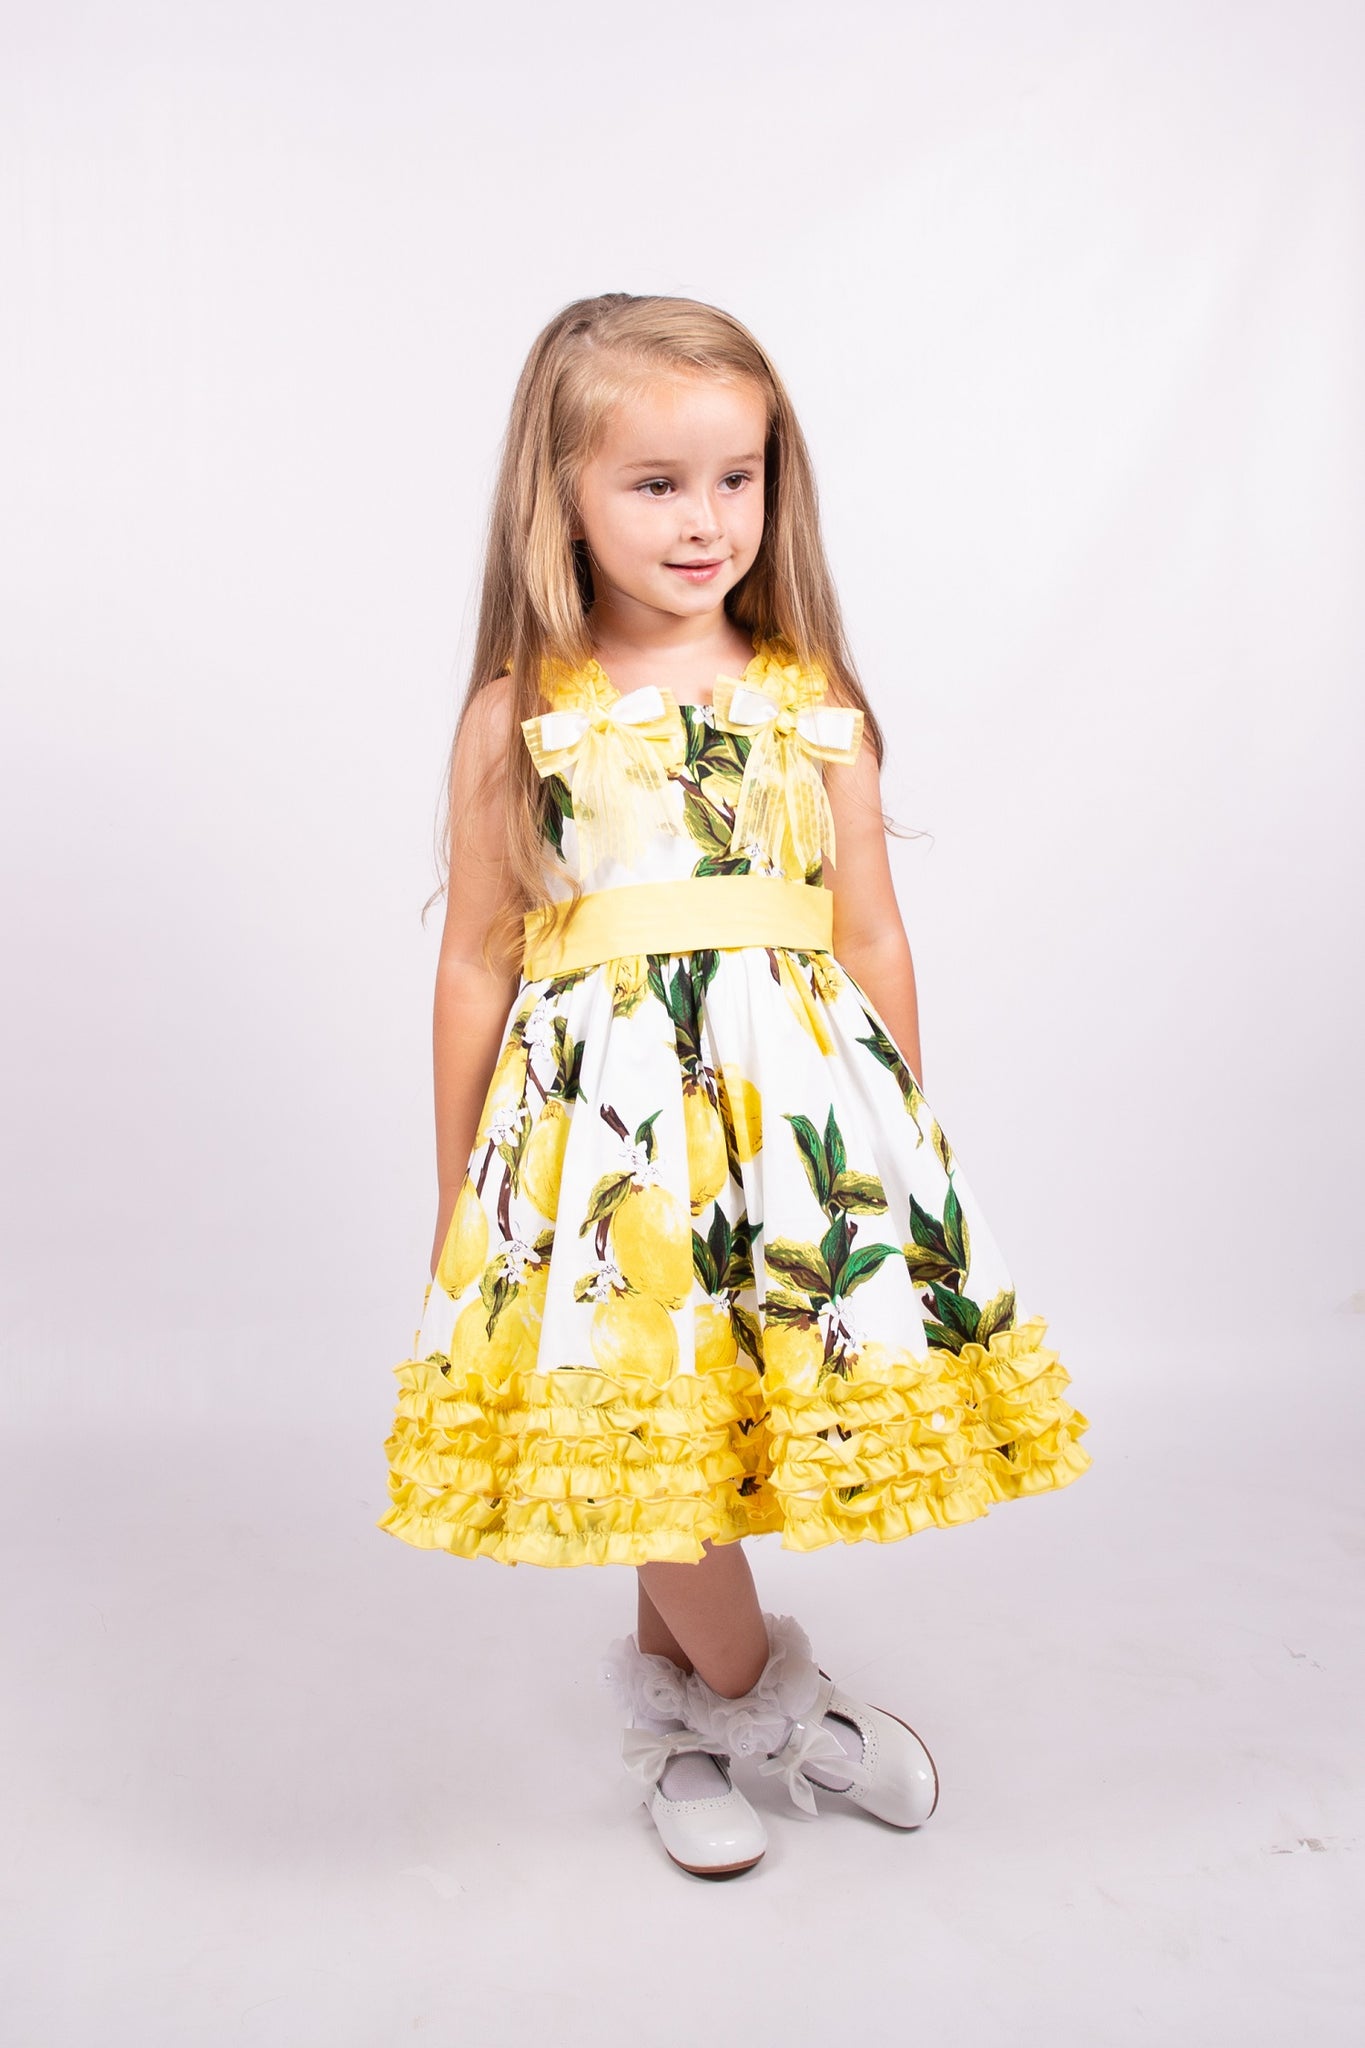 Girl's Lemon print dress with Bows and frills